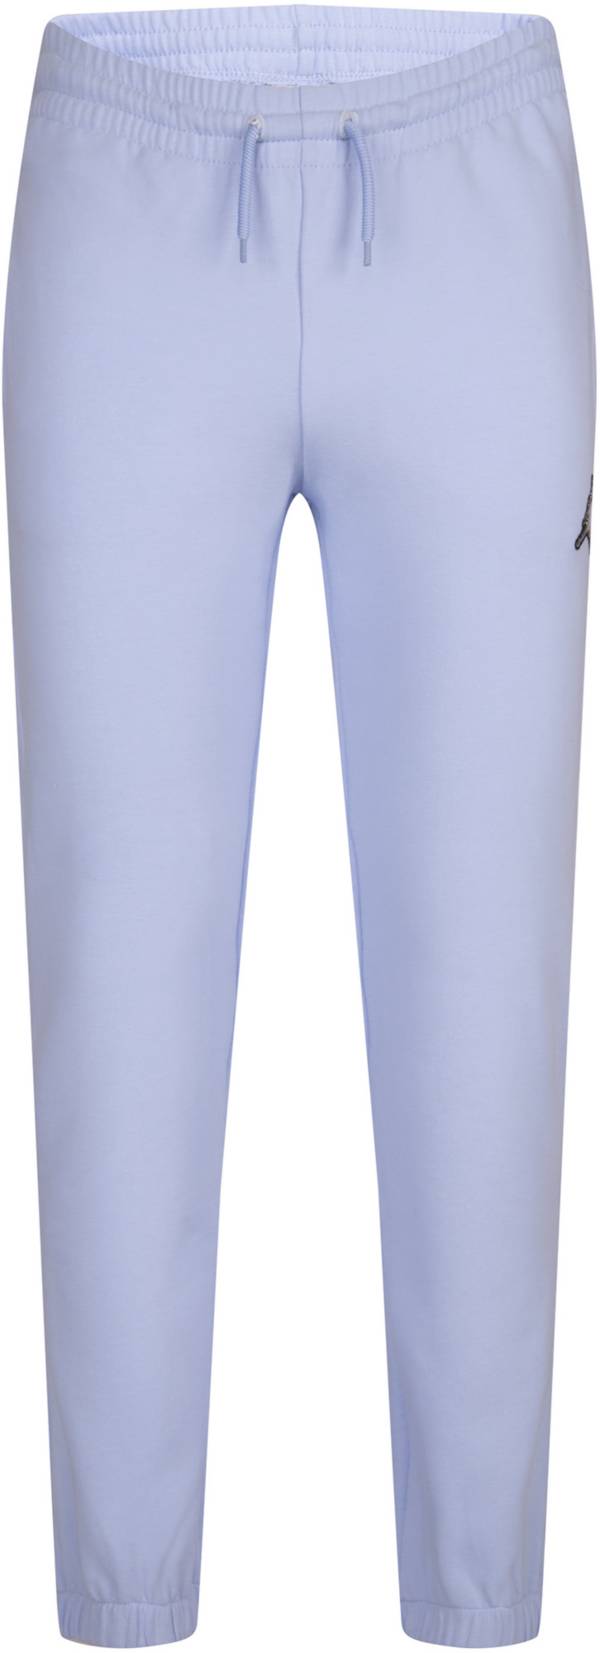 Jordan Girls' Essentials Shine Pants product image